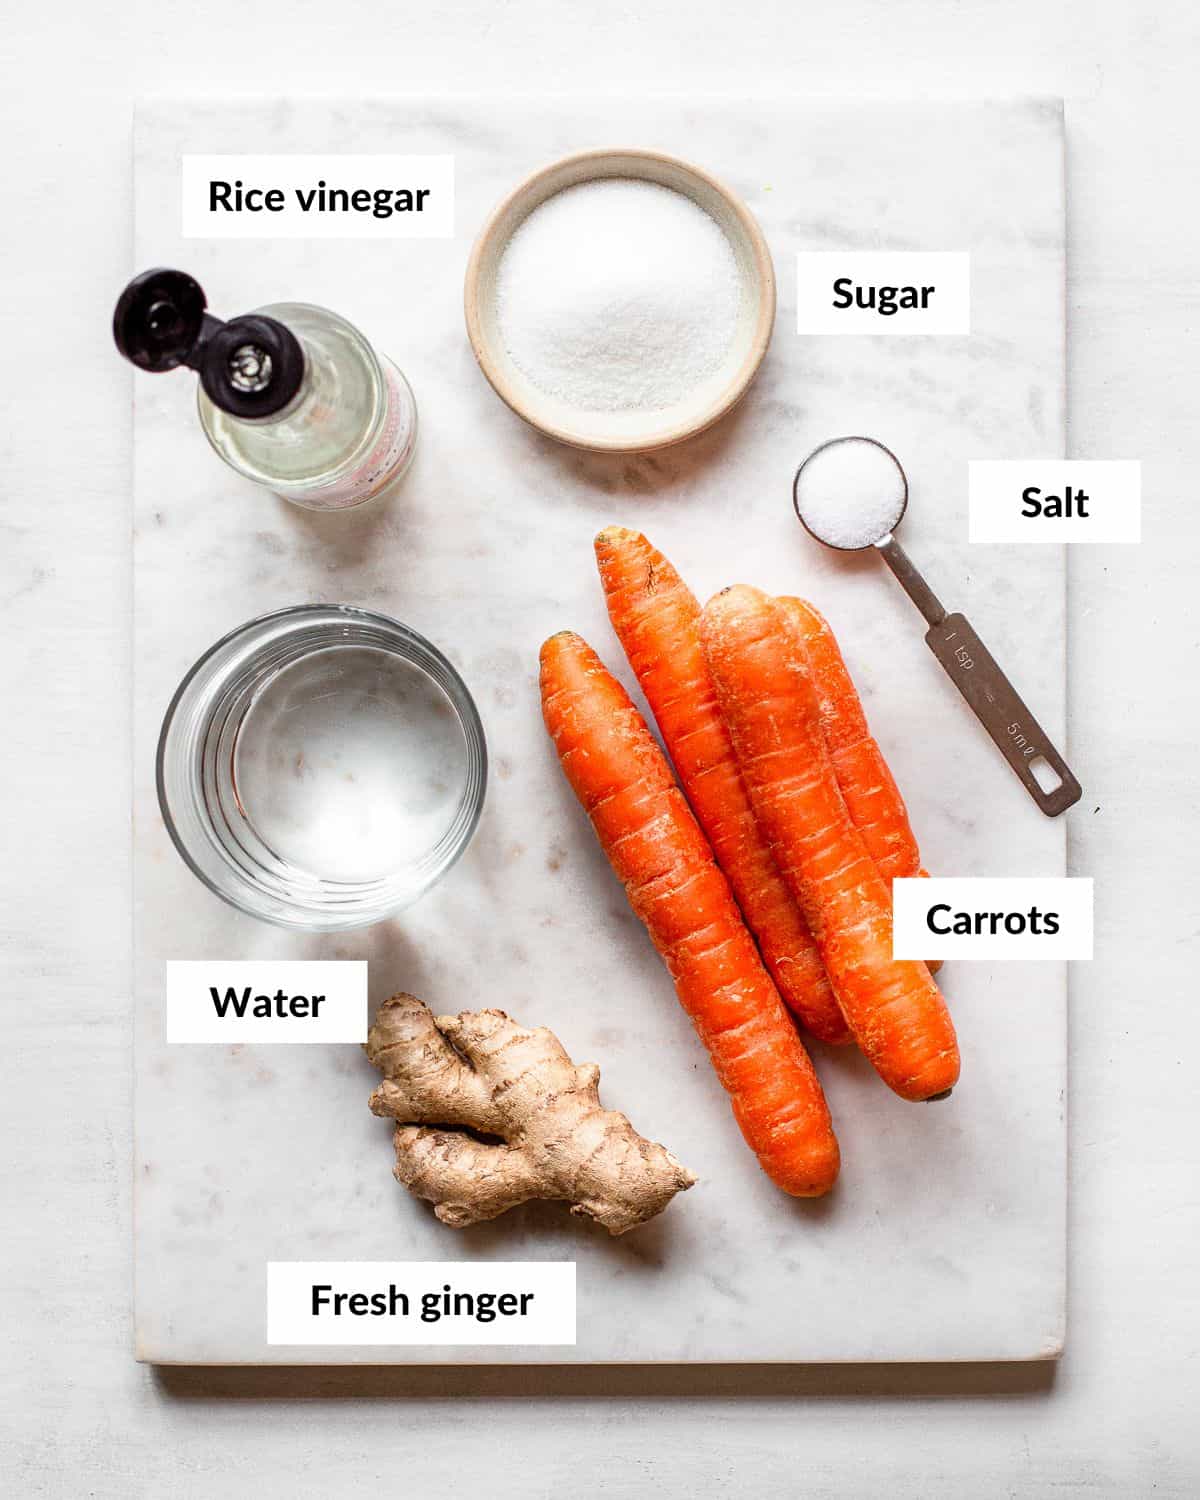 Ingredients for ginger pickled carrots with descriptive labels.